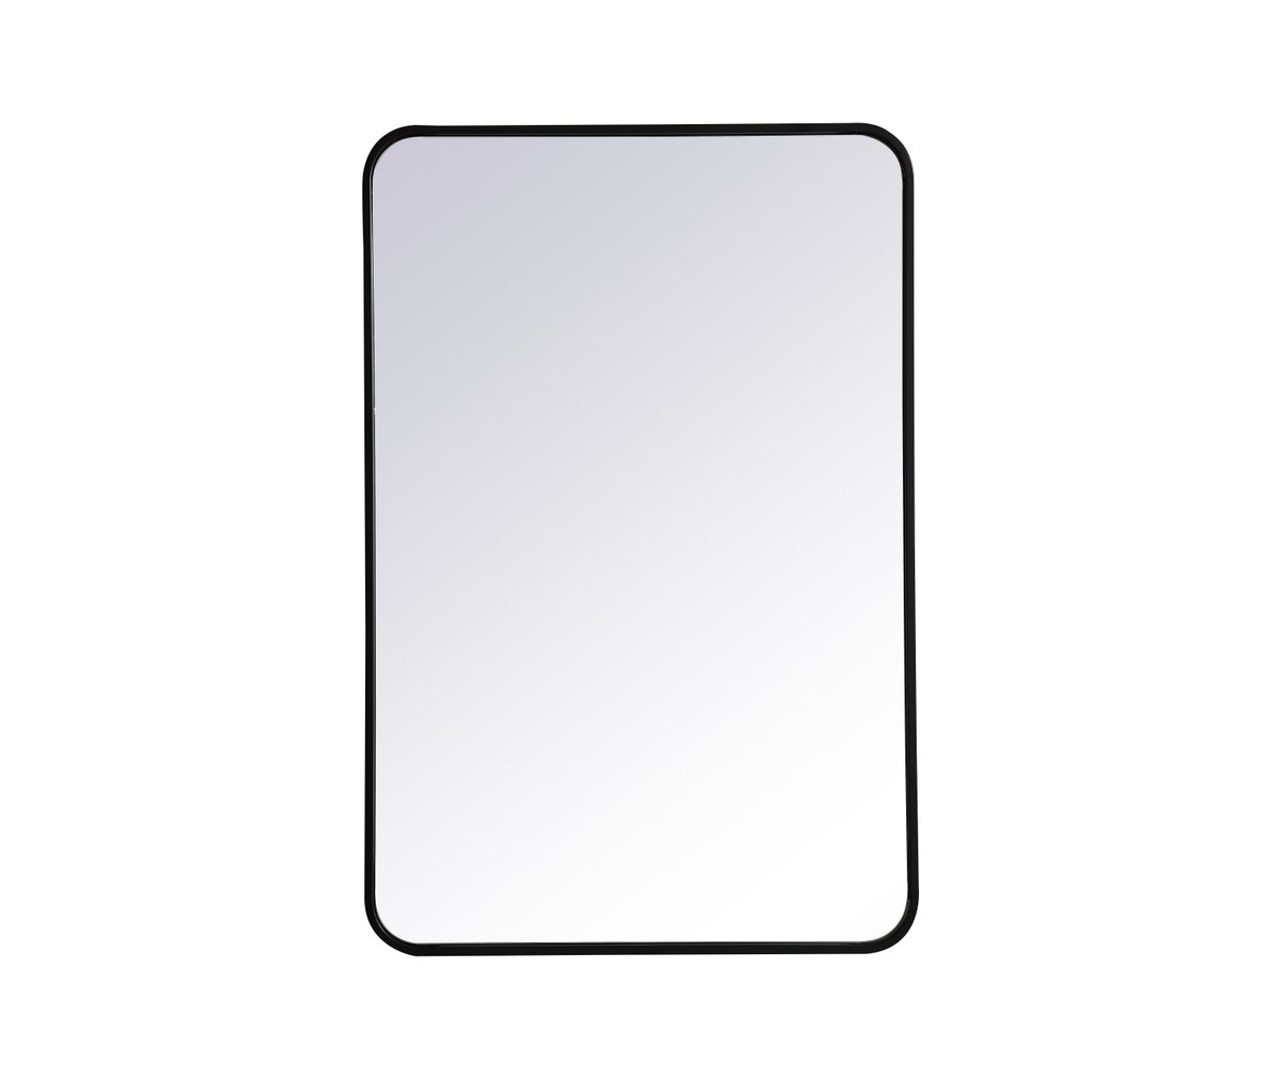 Elegant Decor MR802436BK Soft corner metal rectangular mirror 24x36 inch in Black